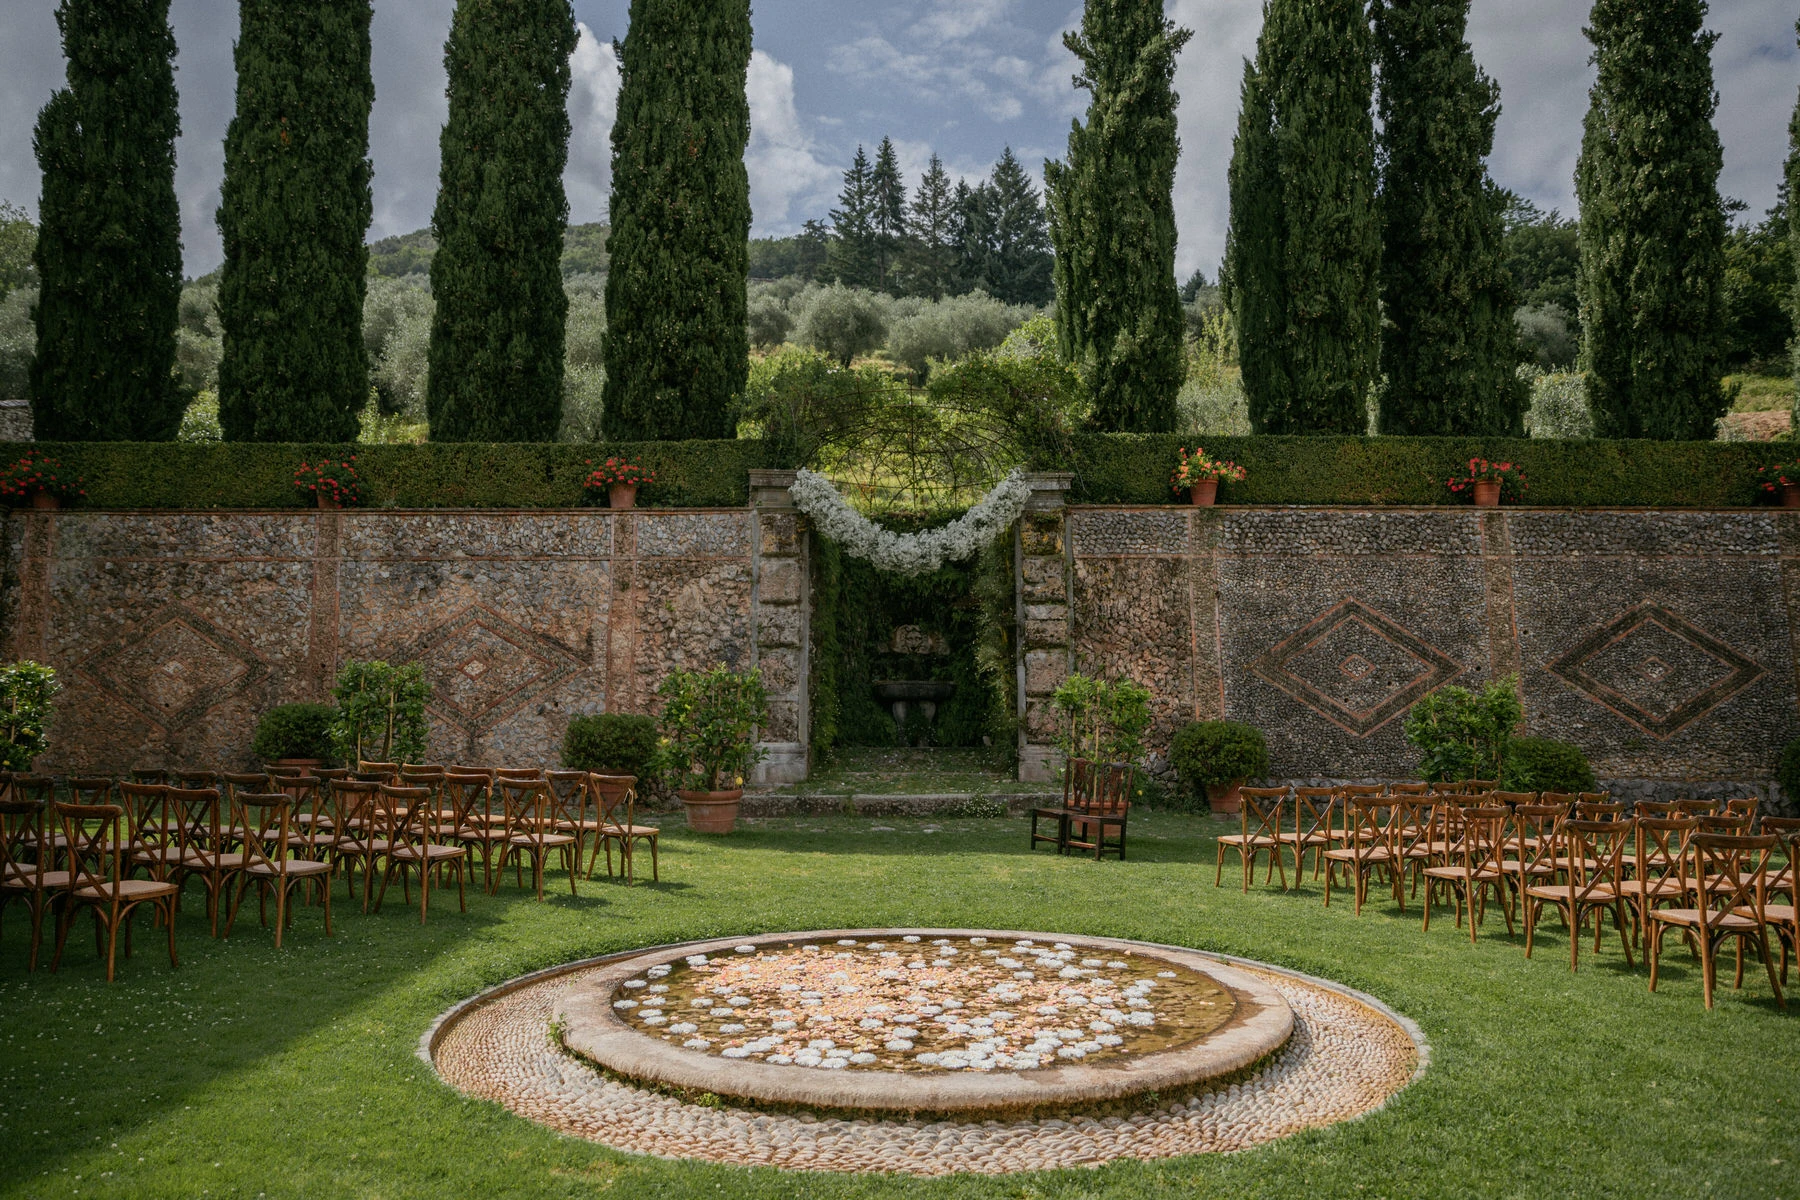 Experience the Magic of a Tuscany Wedding